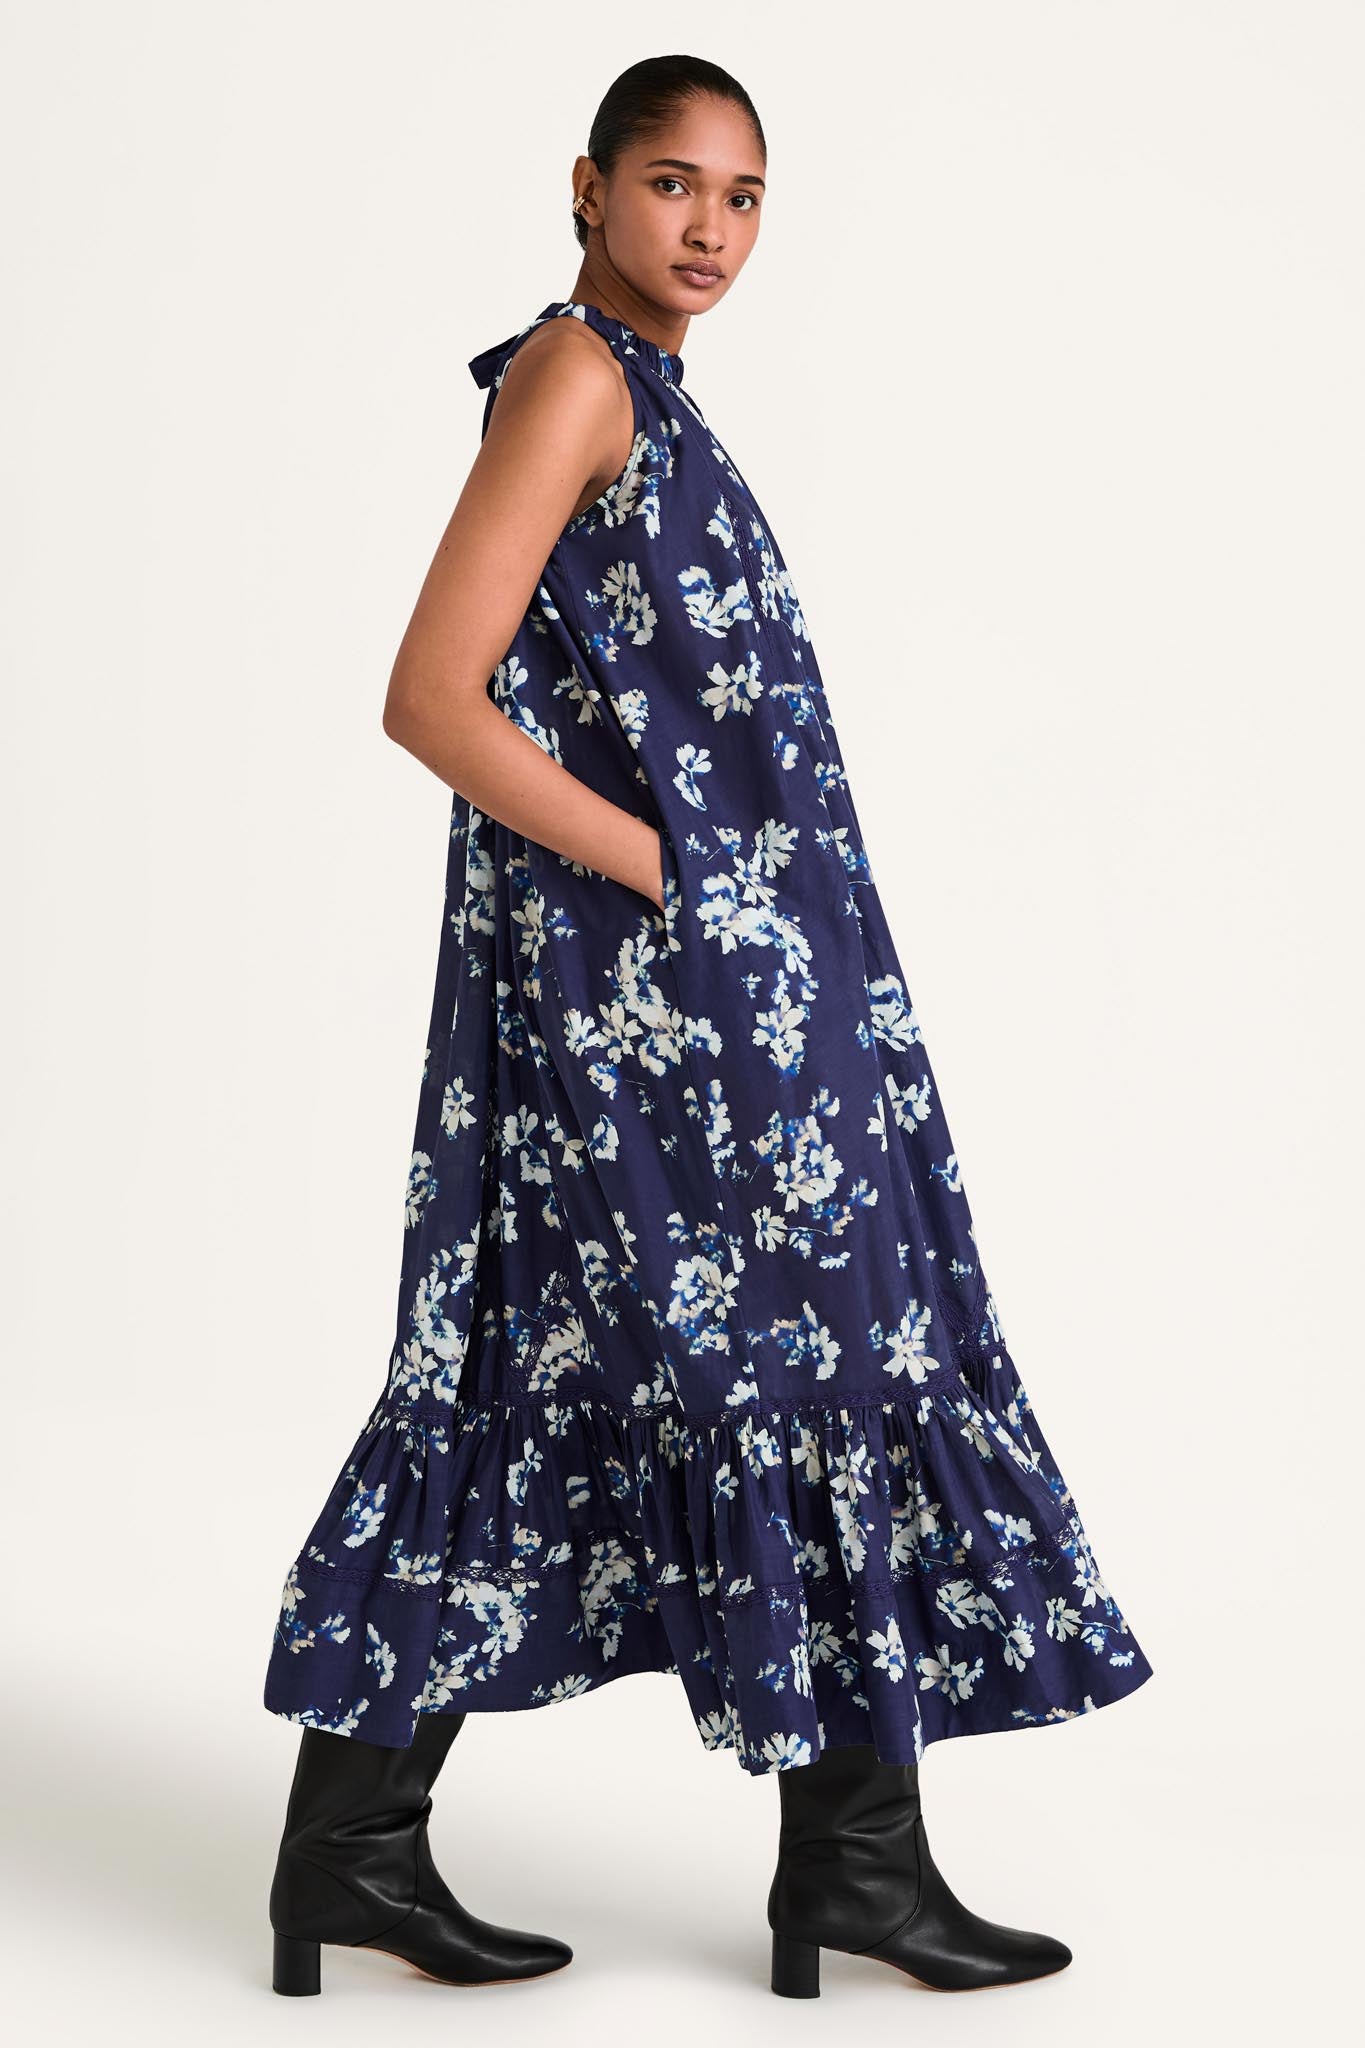 Celestia Dress in Indigo Floral Print